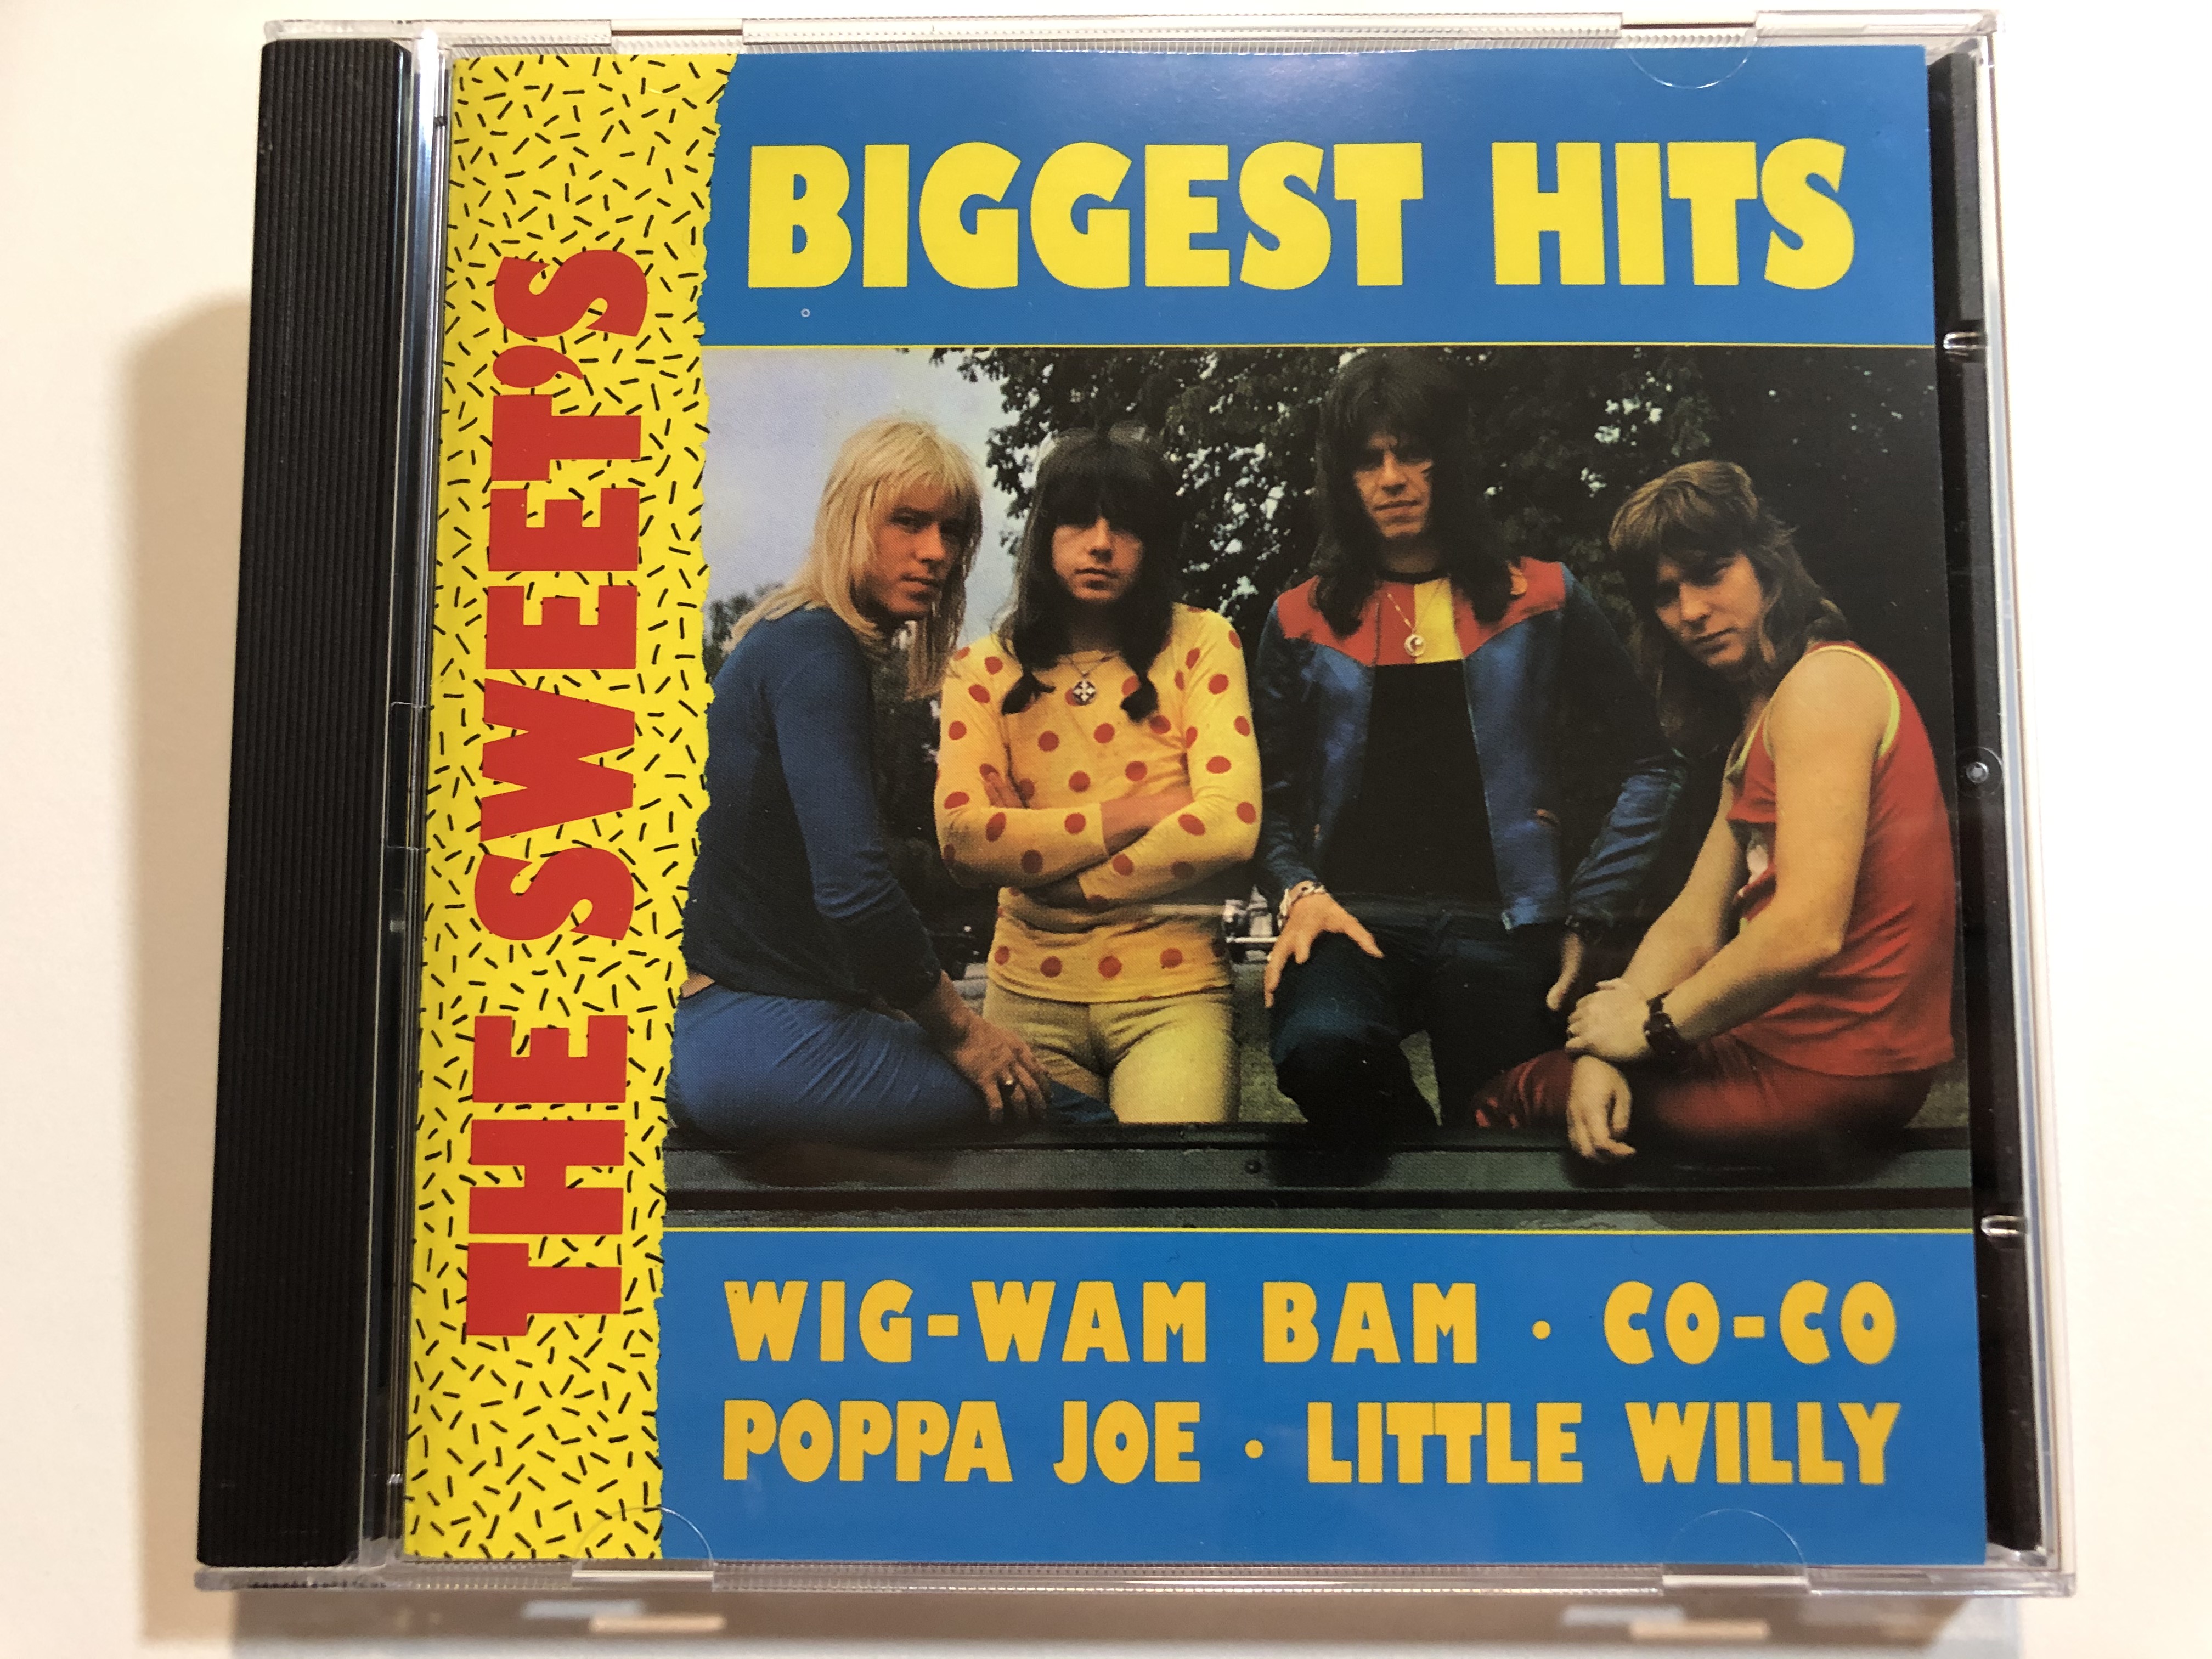 the-sweet-s-biggest-hits-wig-wam-bam-co-co-poppa-joe-little-willy-rca-audio-cd-1992-74321-10630-2-1-.jpg